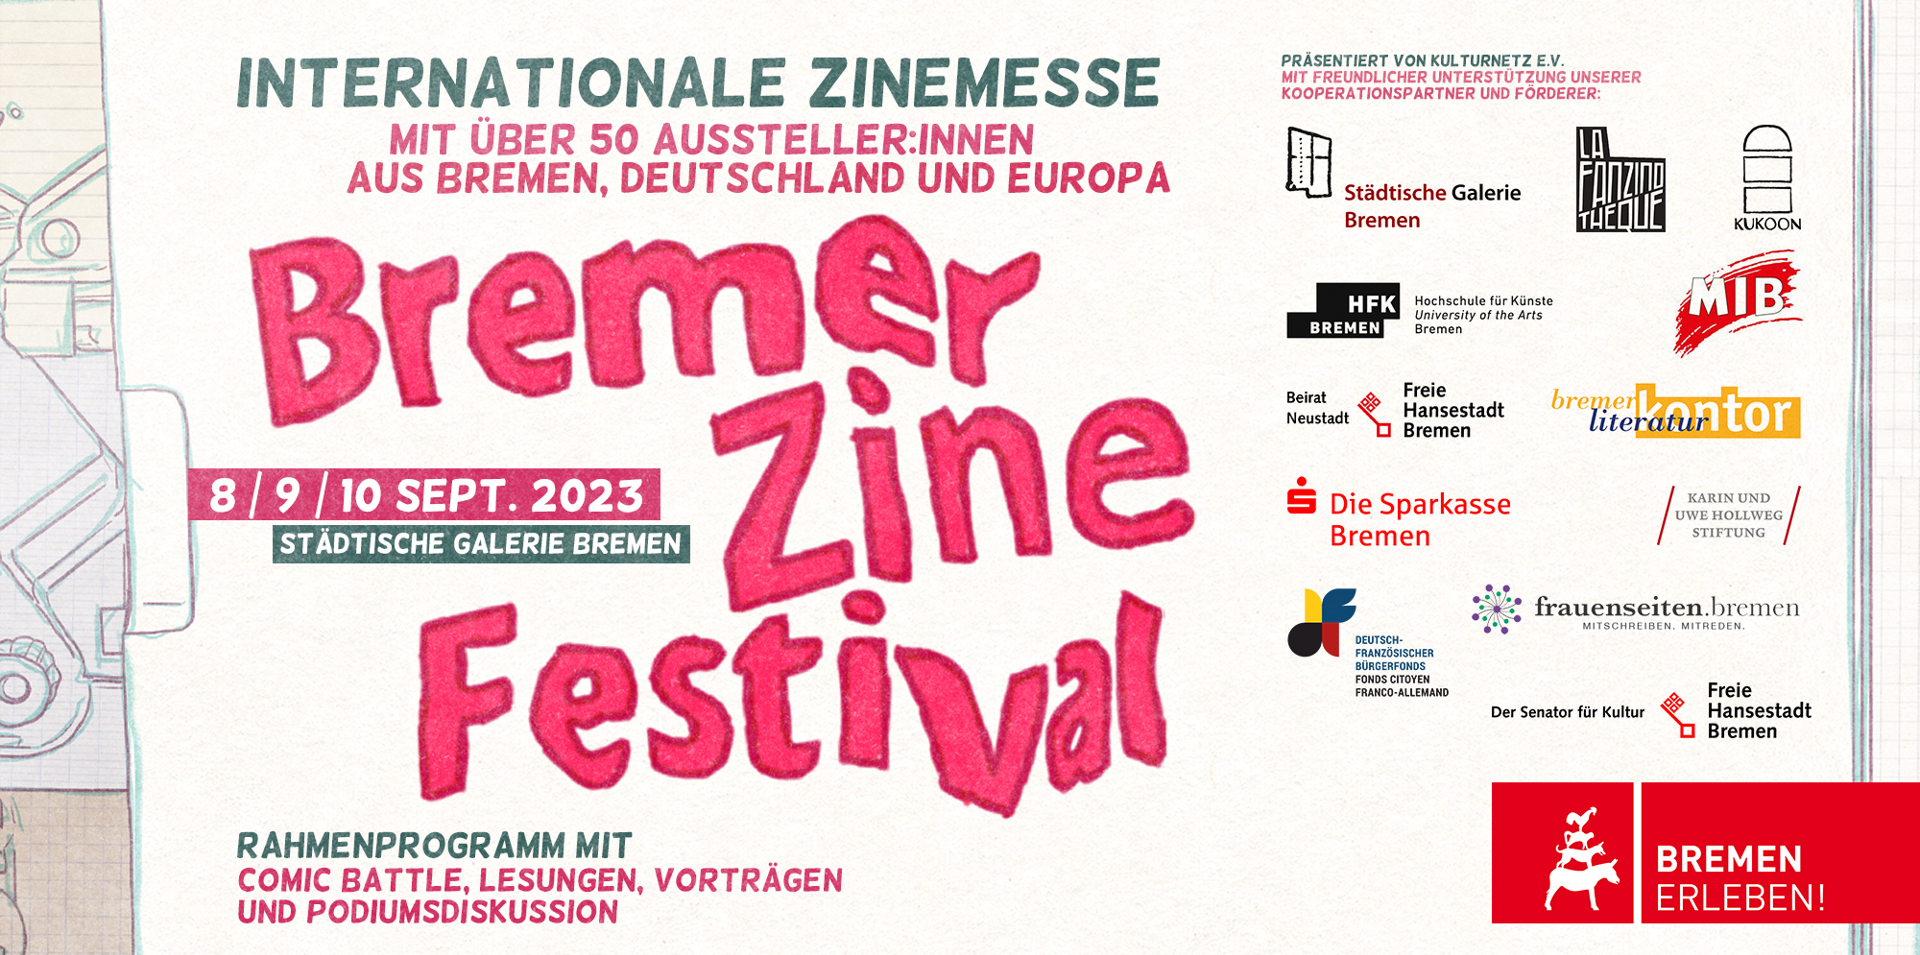 Bremer Zine Festival